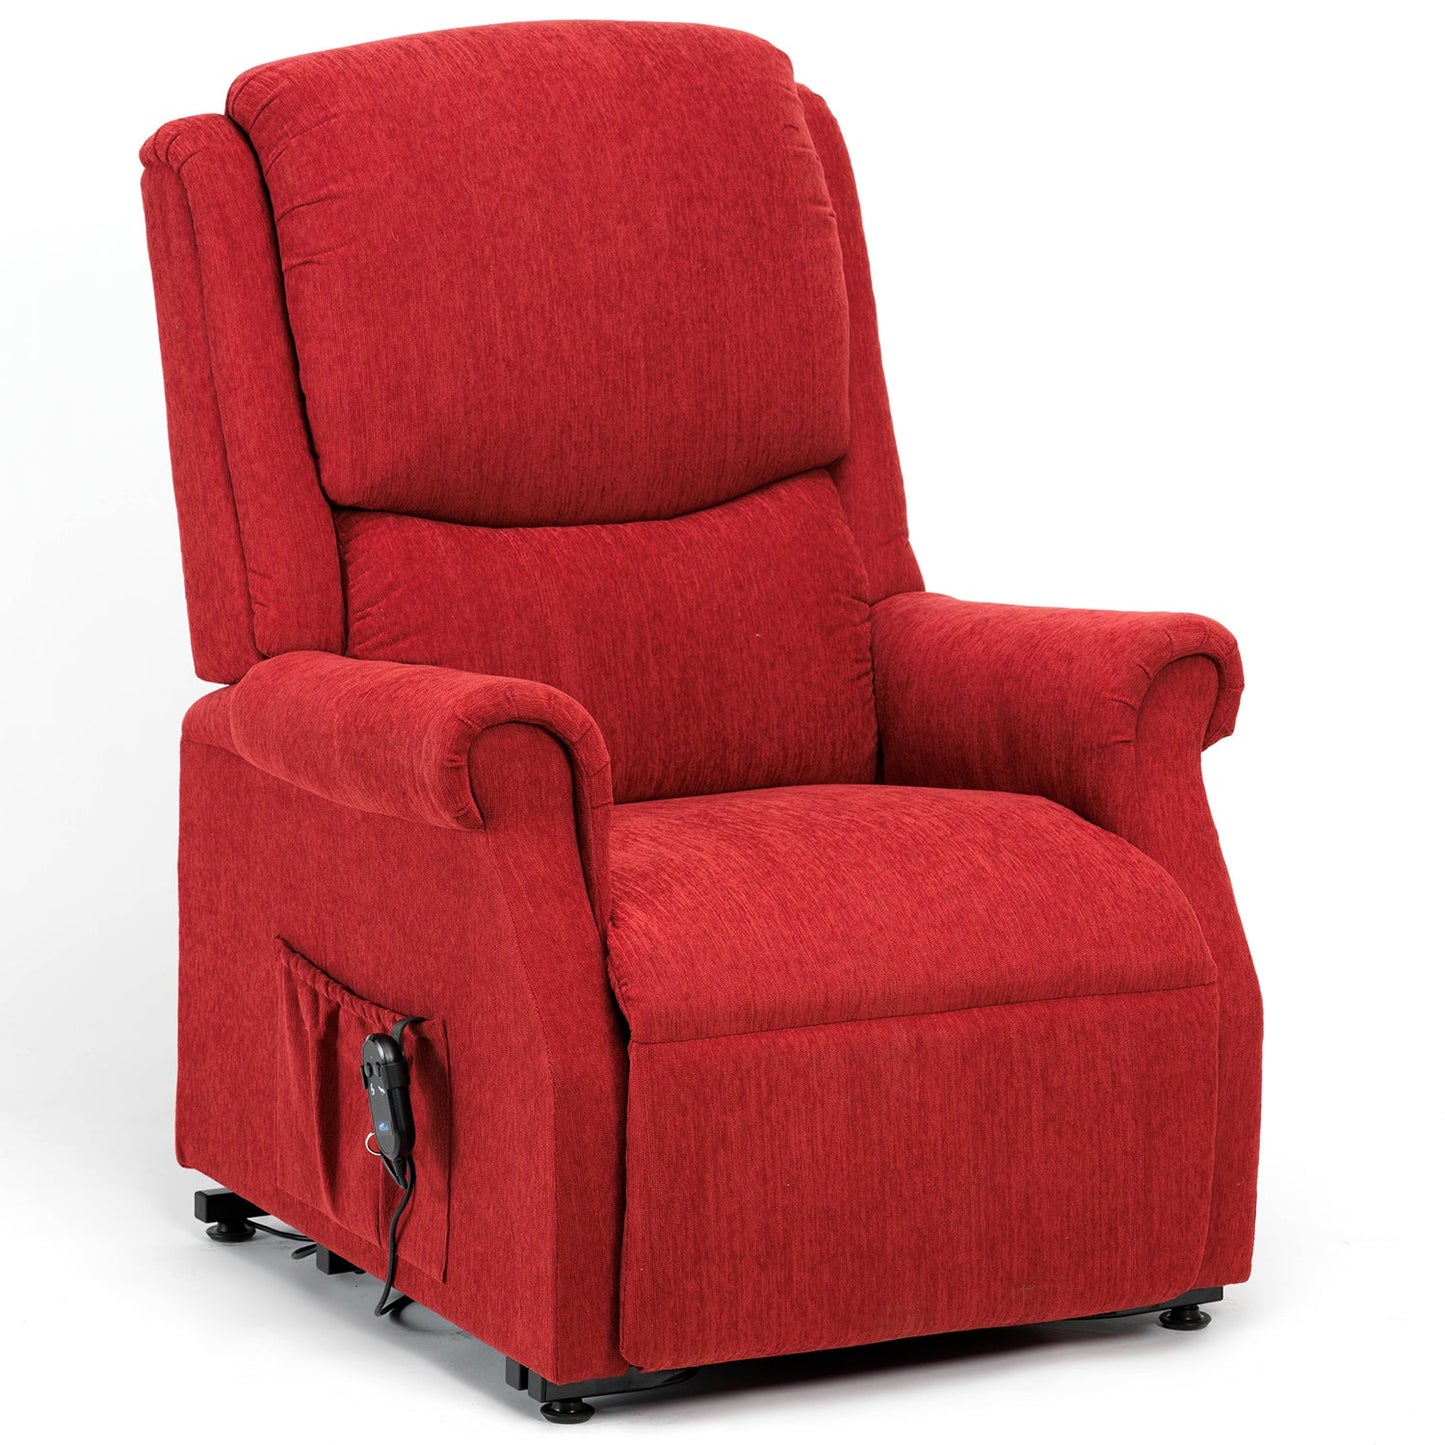 Indiana Single Motor Standard & Petite Riser Recliner Chair